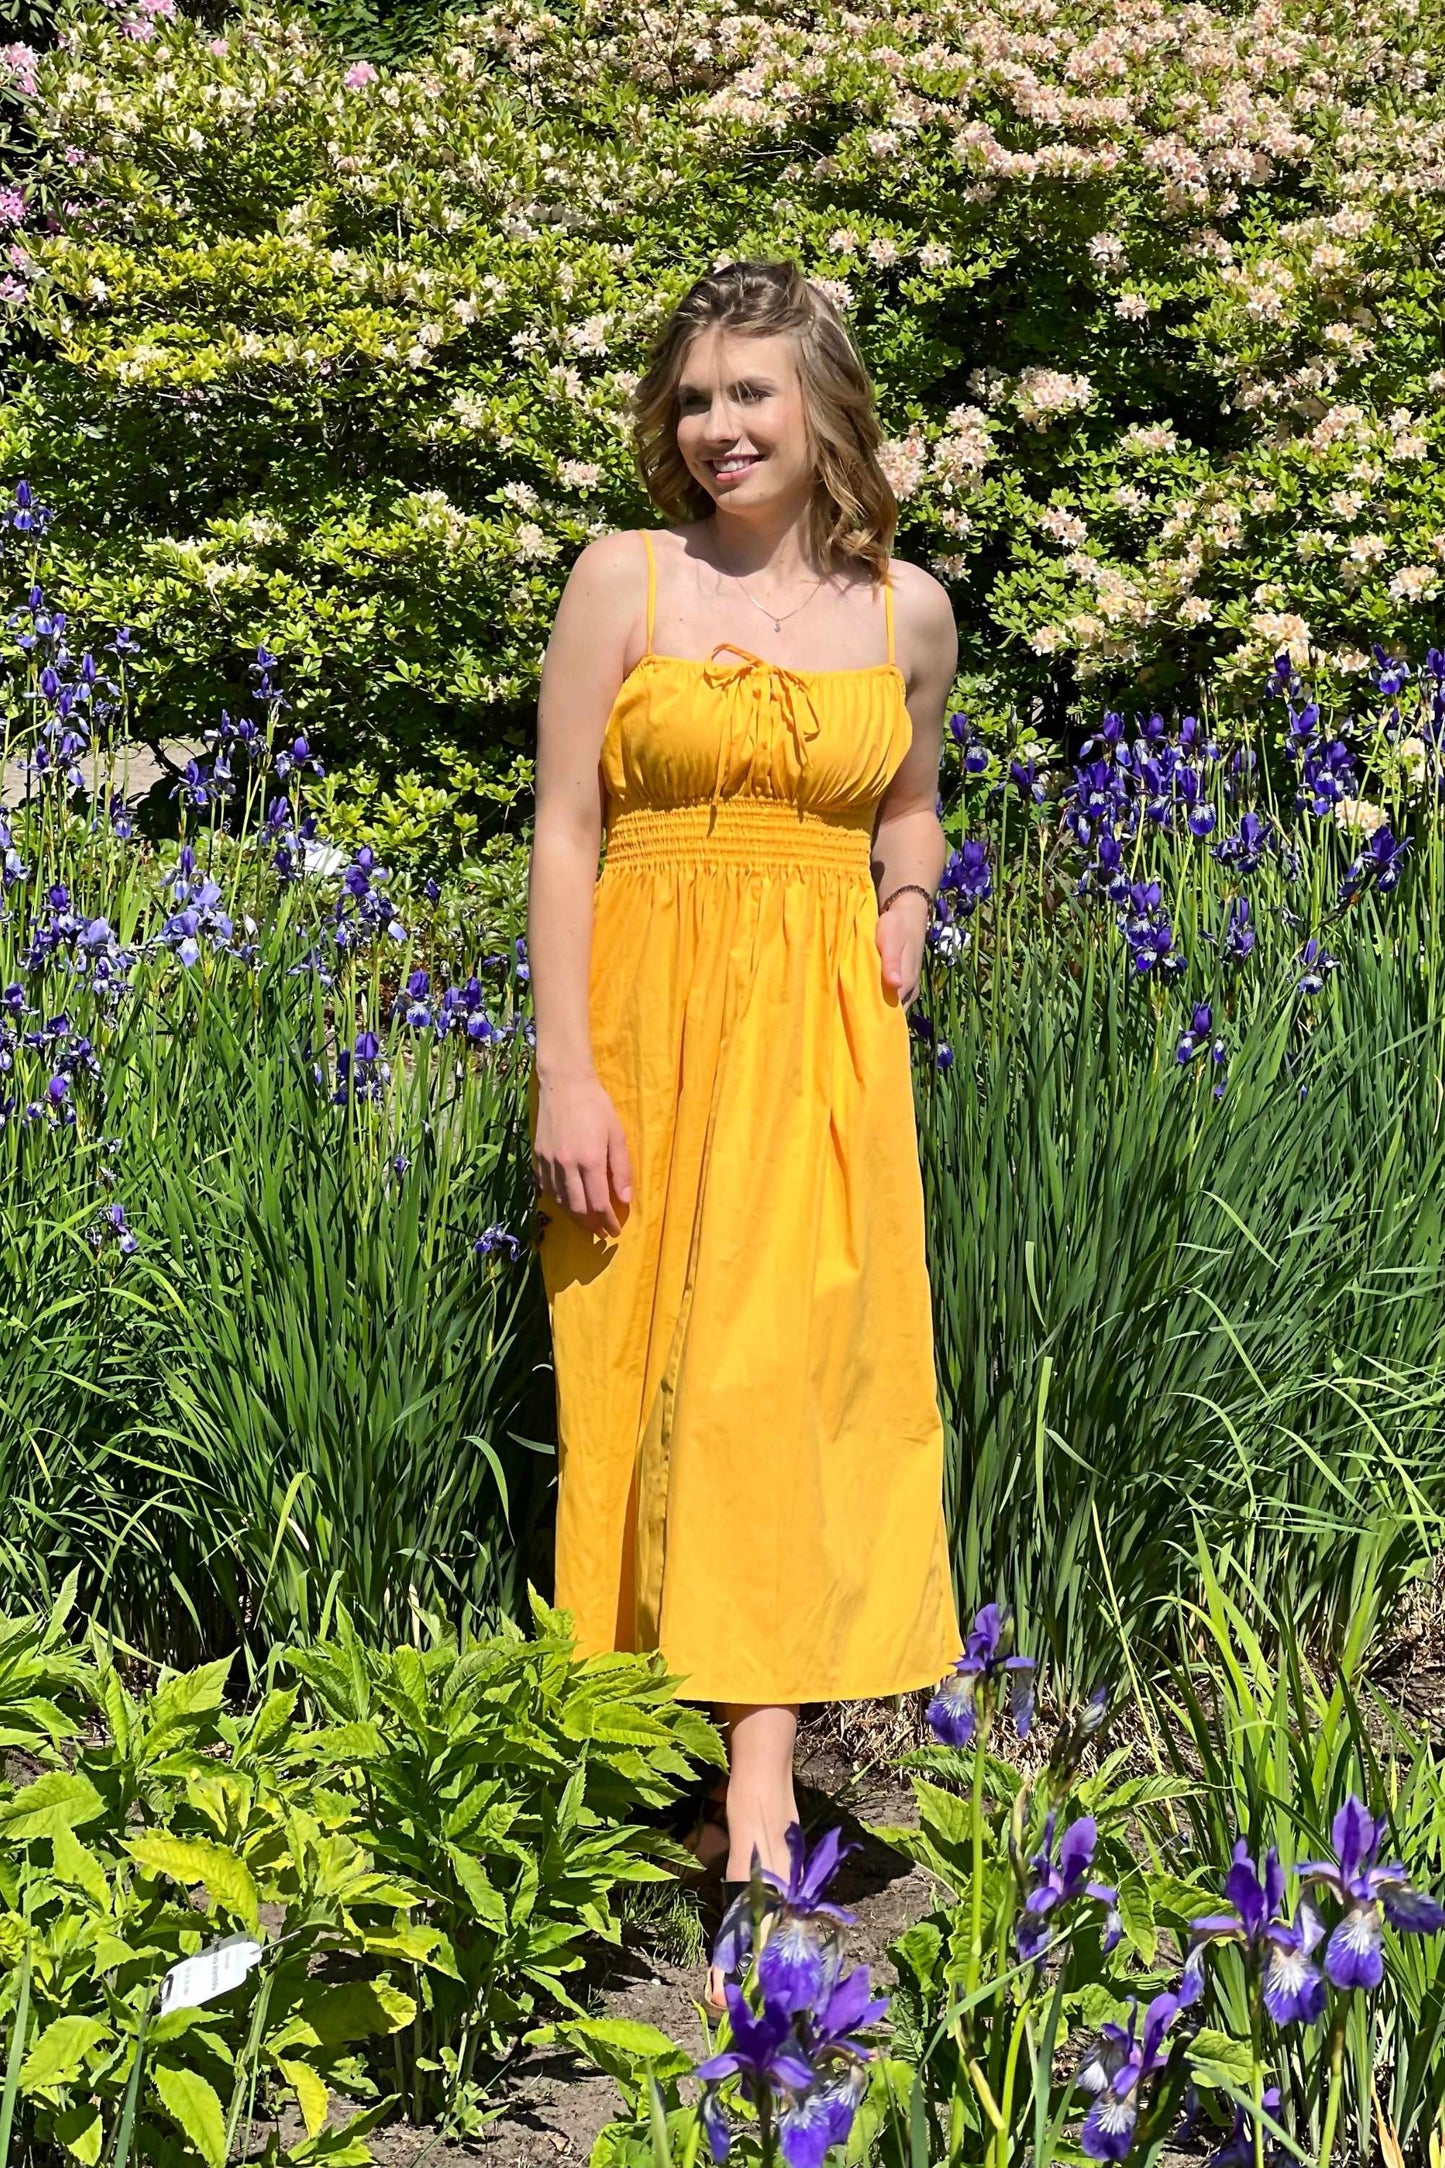 Yellow organic cotton dress with straps